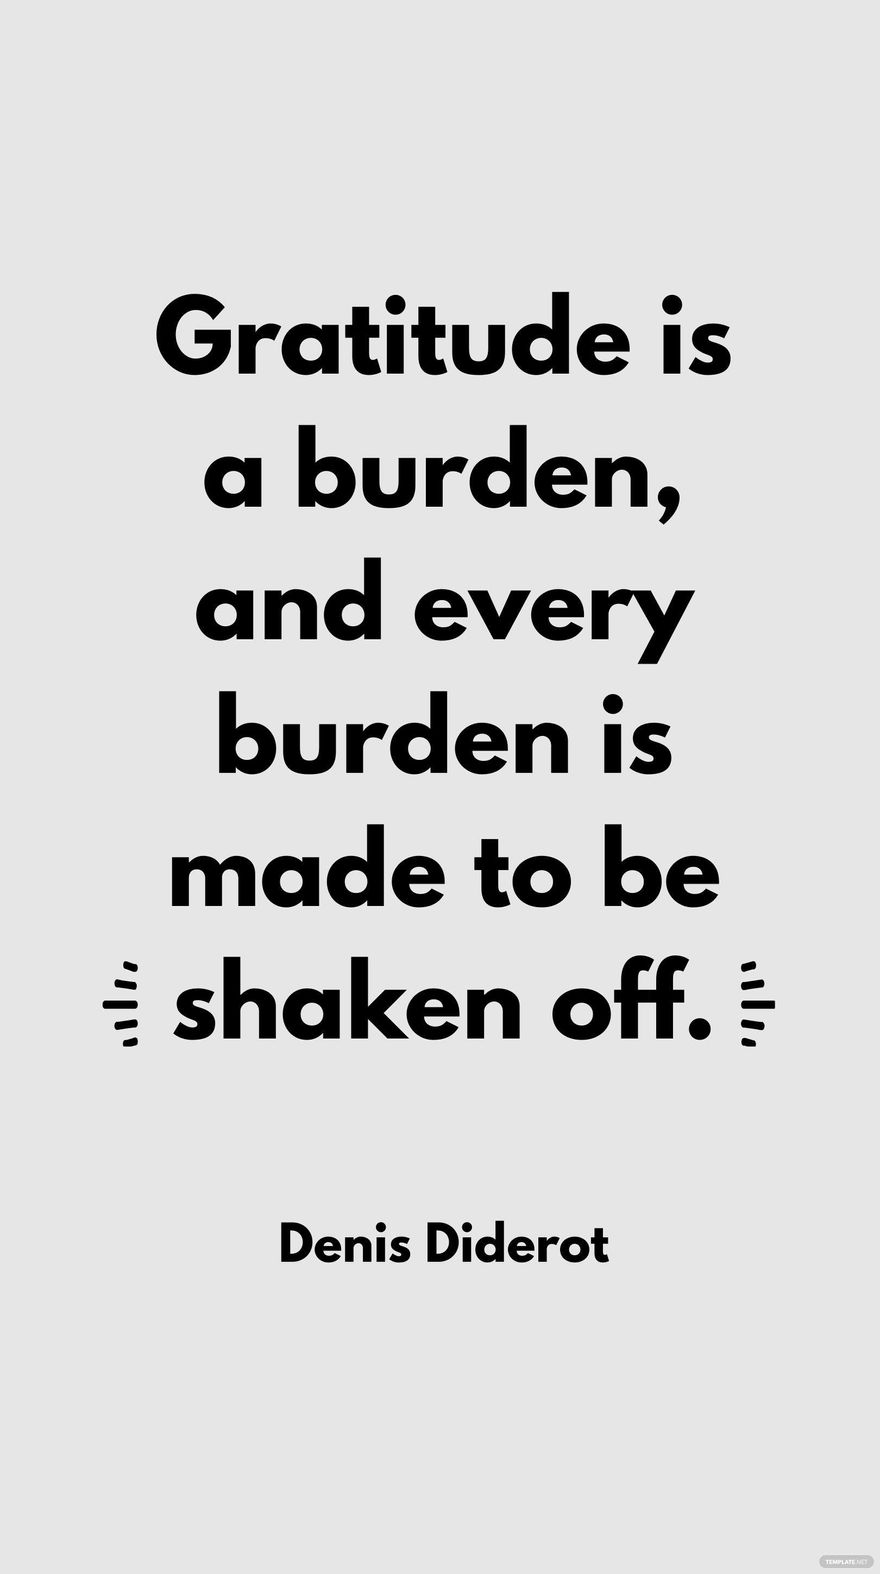 Denis Diderot - Gratitude is a burden, and every burden is made to be shaken off. in JPG